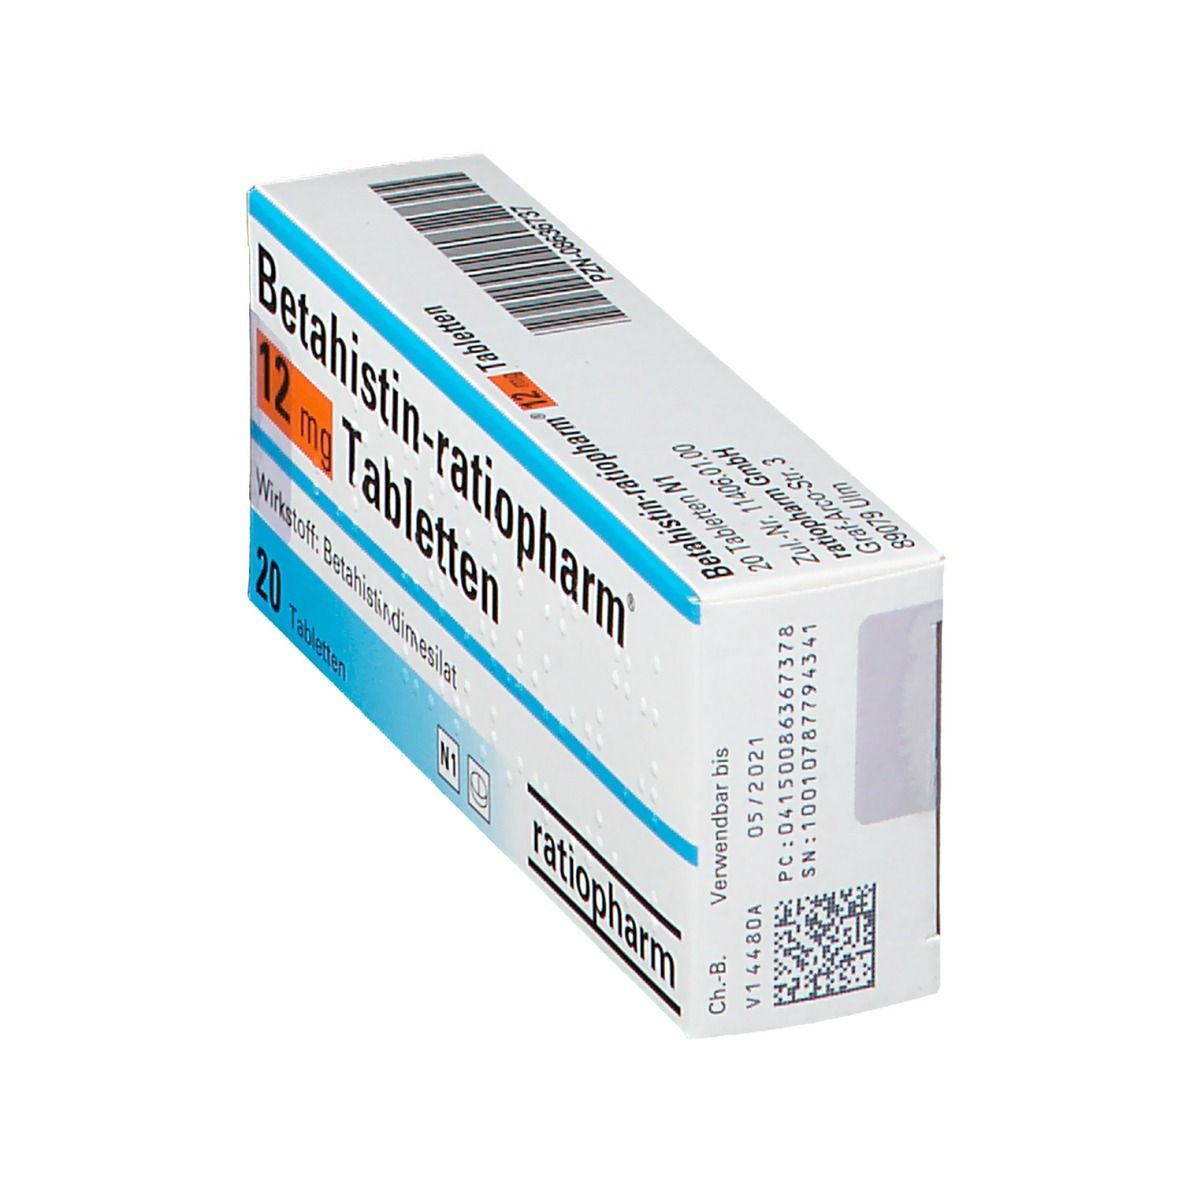 Betahistin-ratiopharm® 12 mg